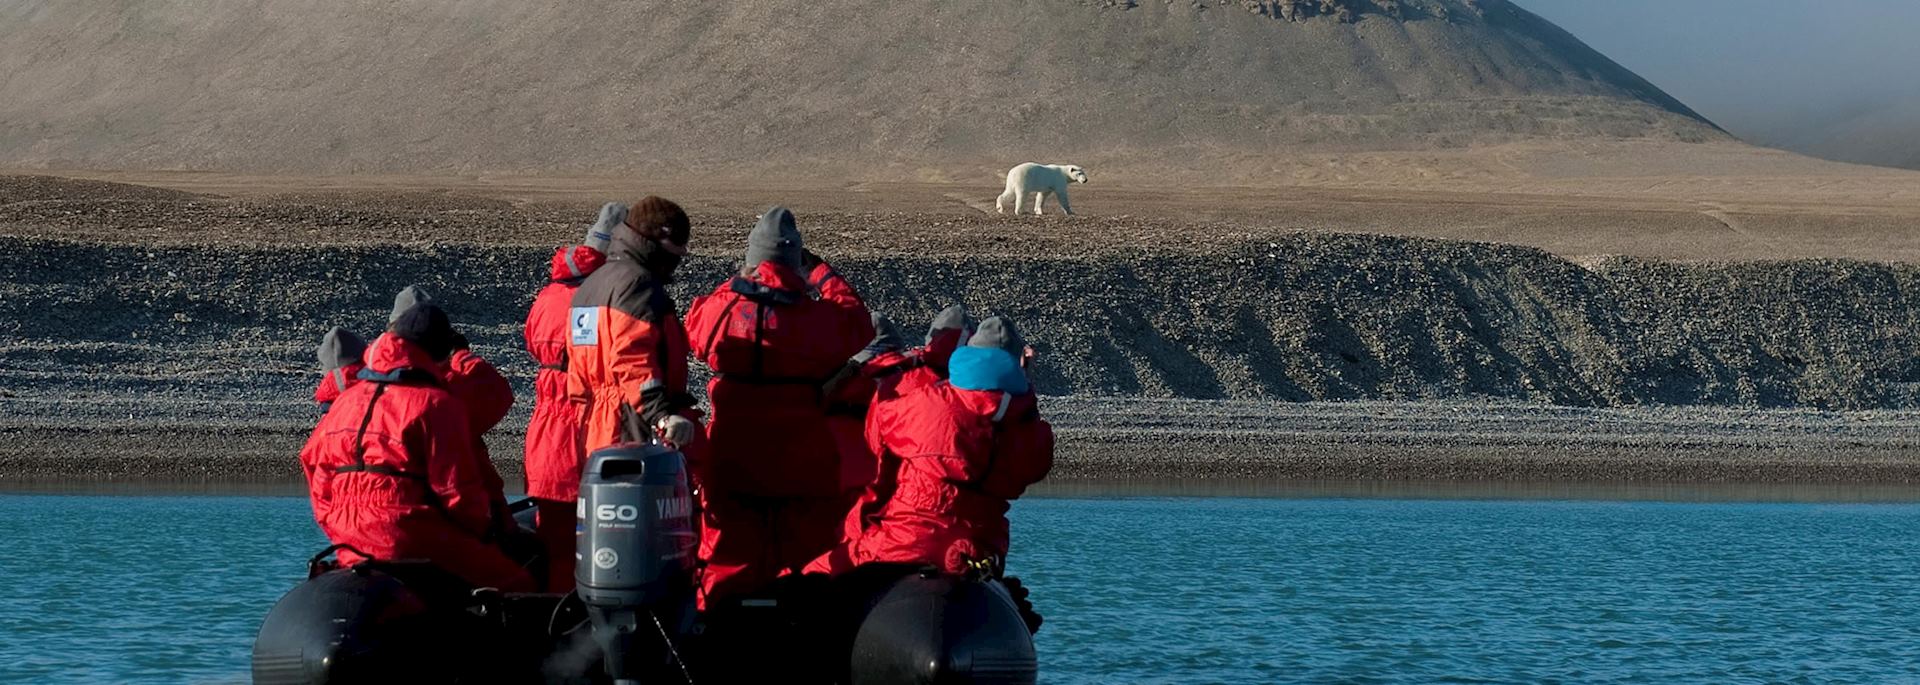 Polar bear, Northwest Passage, Canada